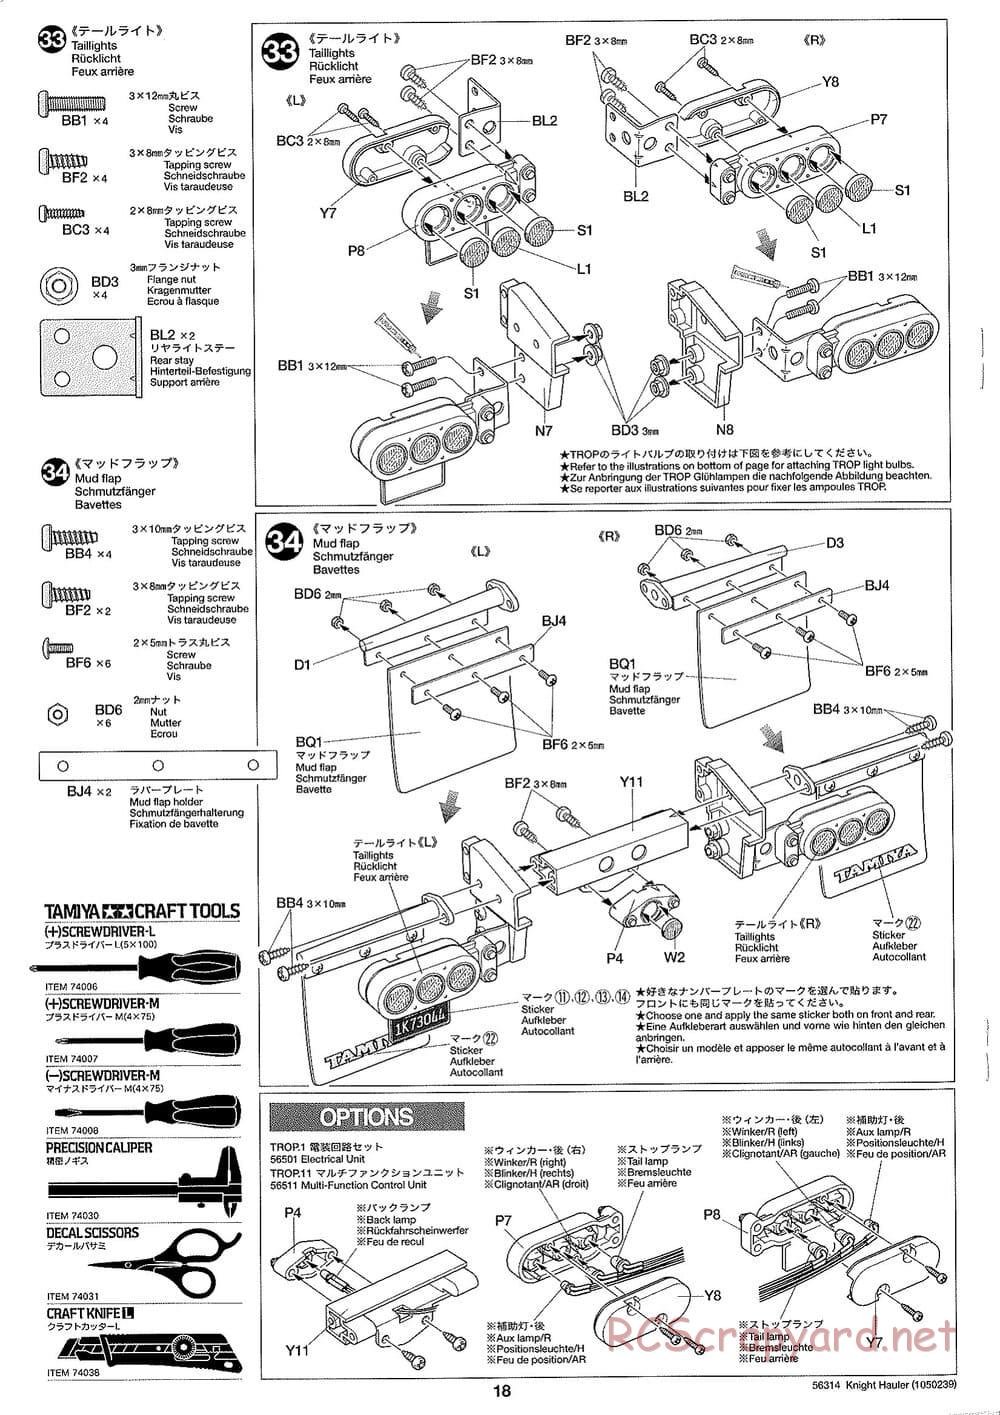 Tamiya - Knight Hauler Tractor Truck Chassis - Manual - Page 18